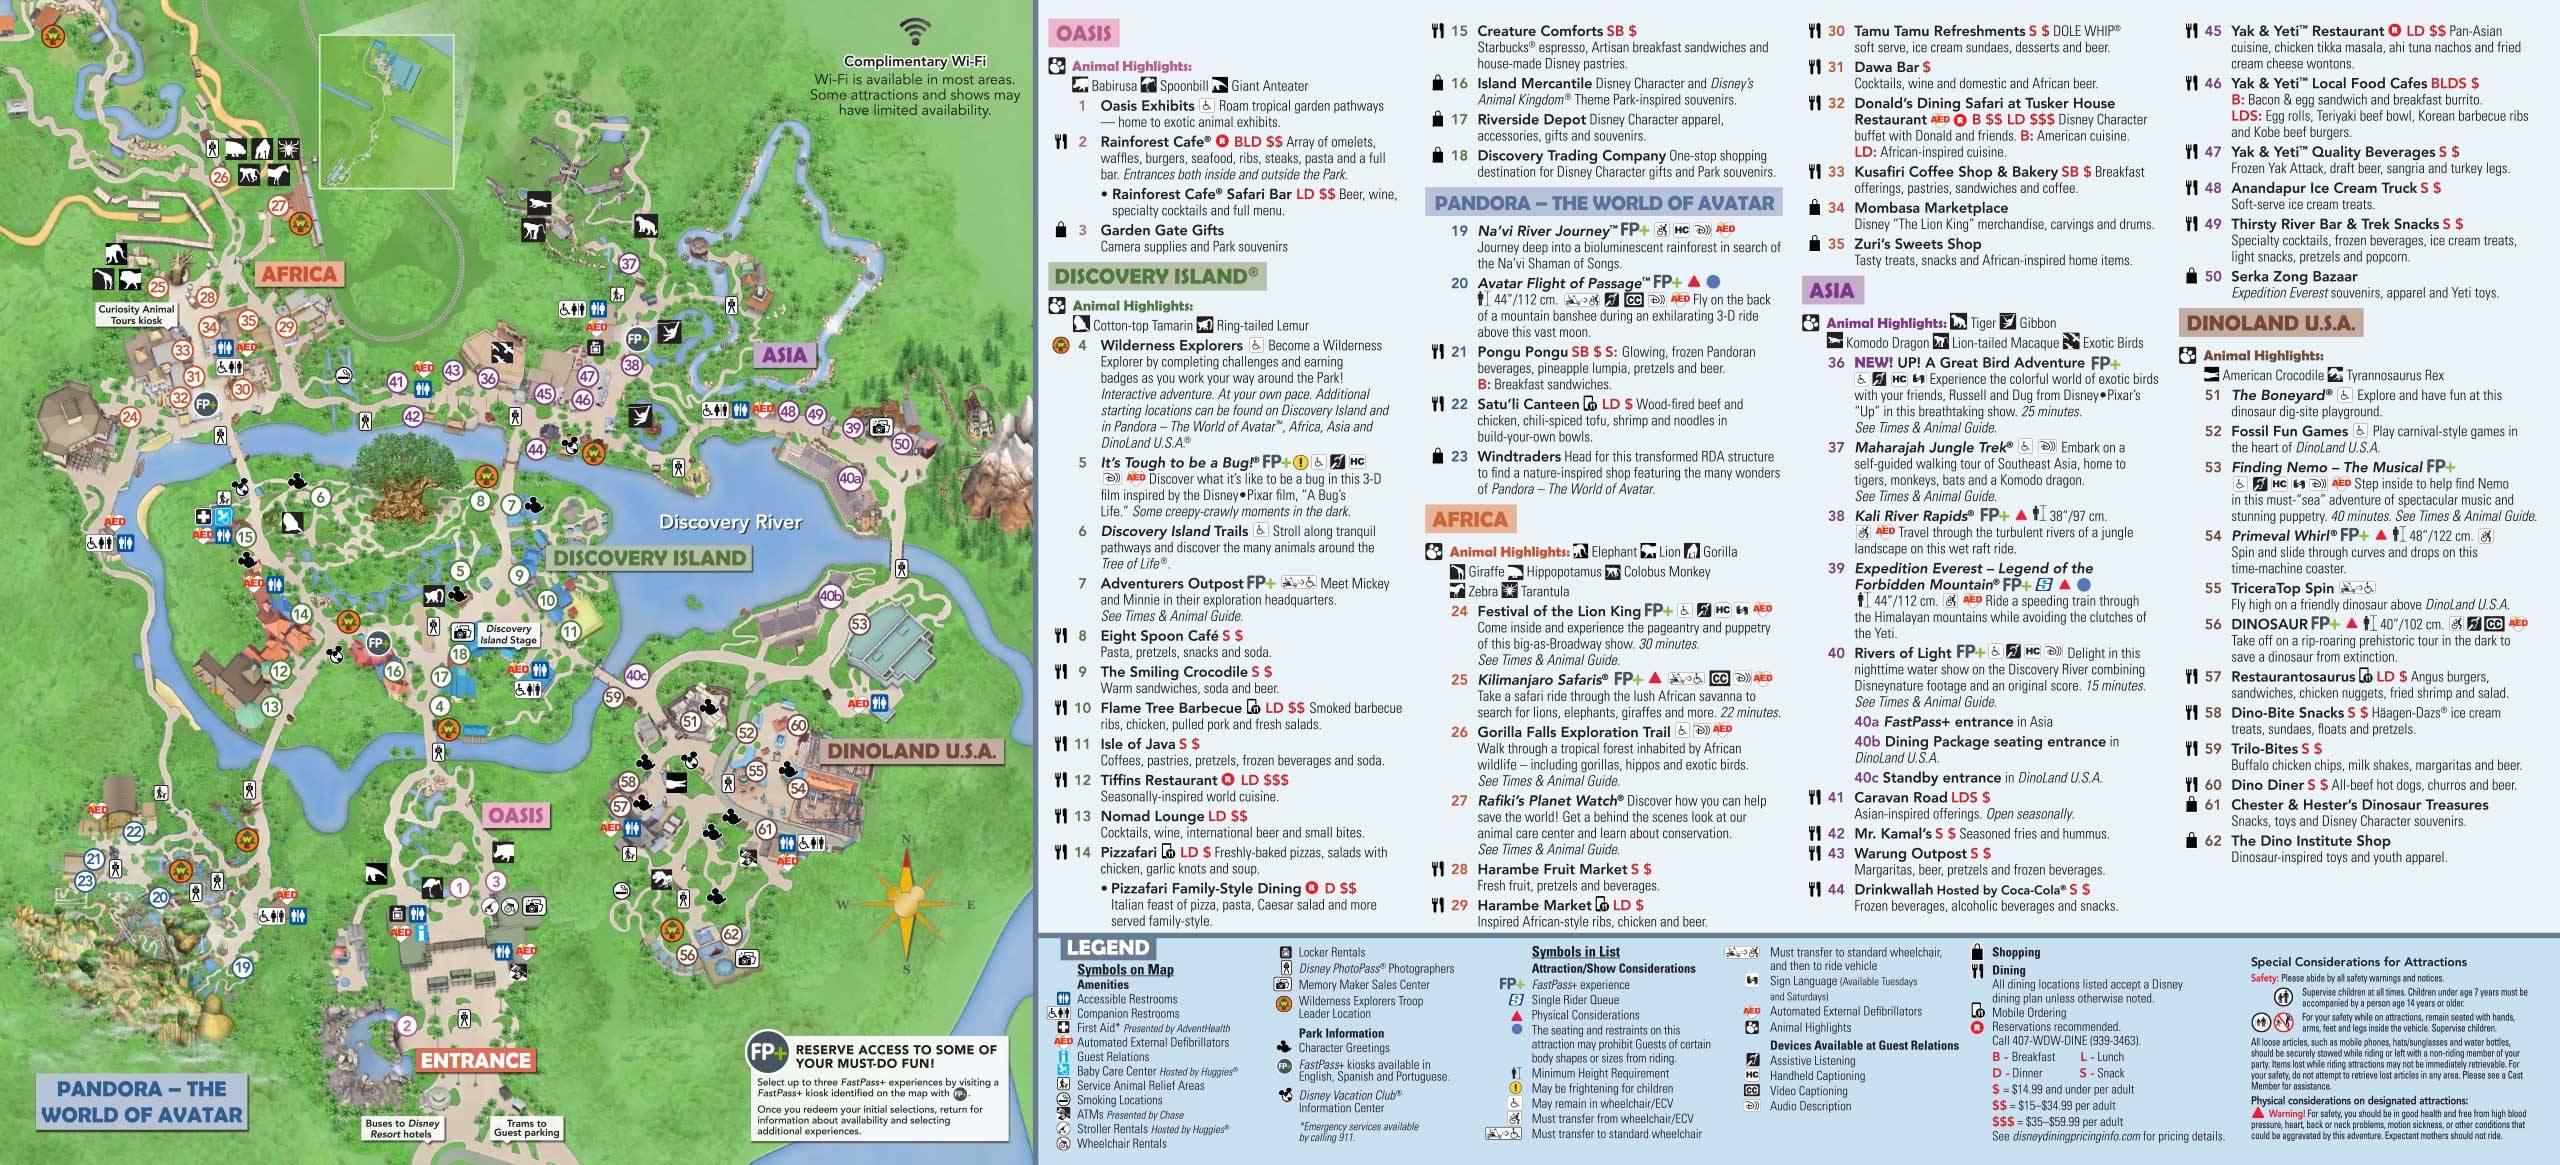 Disney's Animal Kingdom Guide Map January 2019 - Back